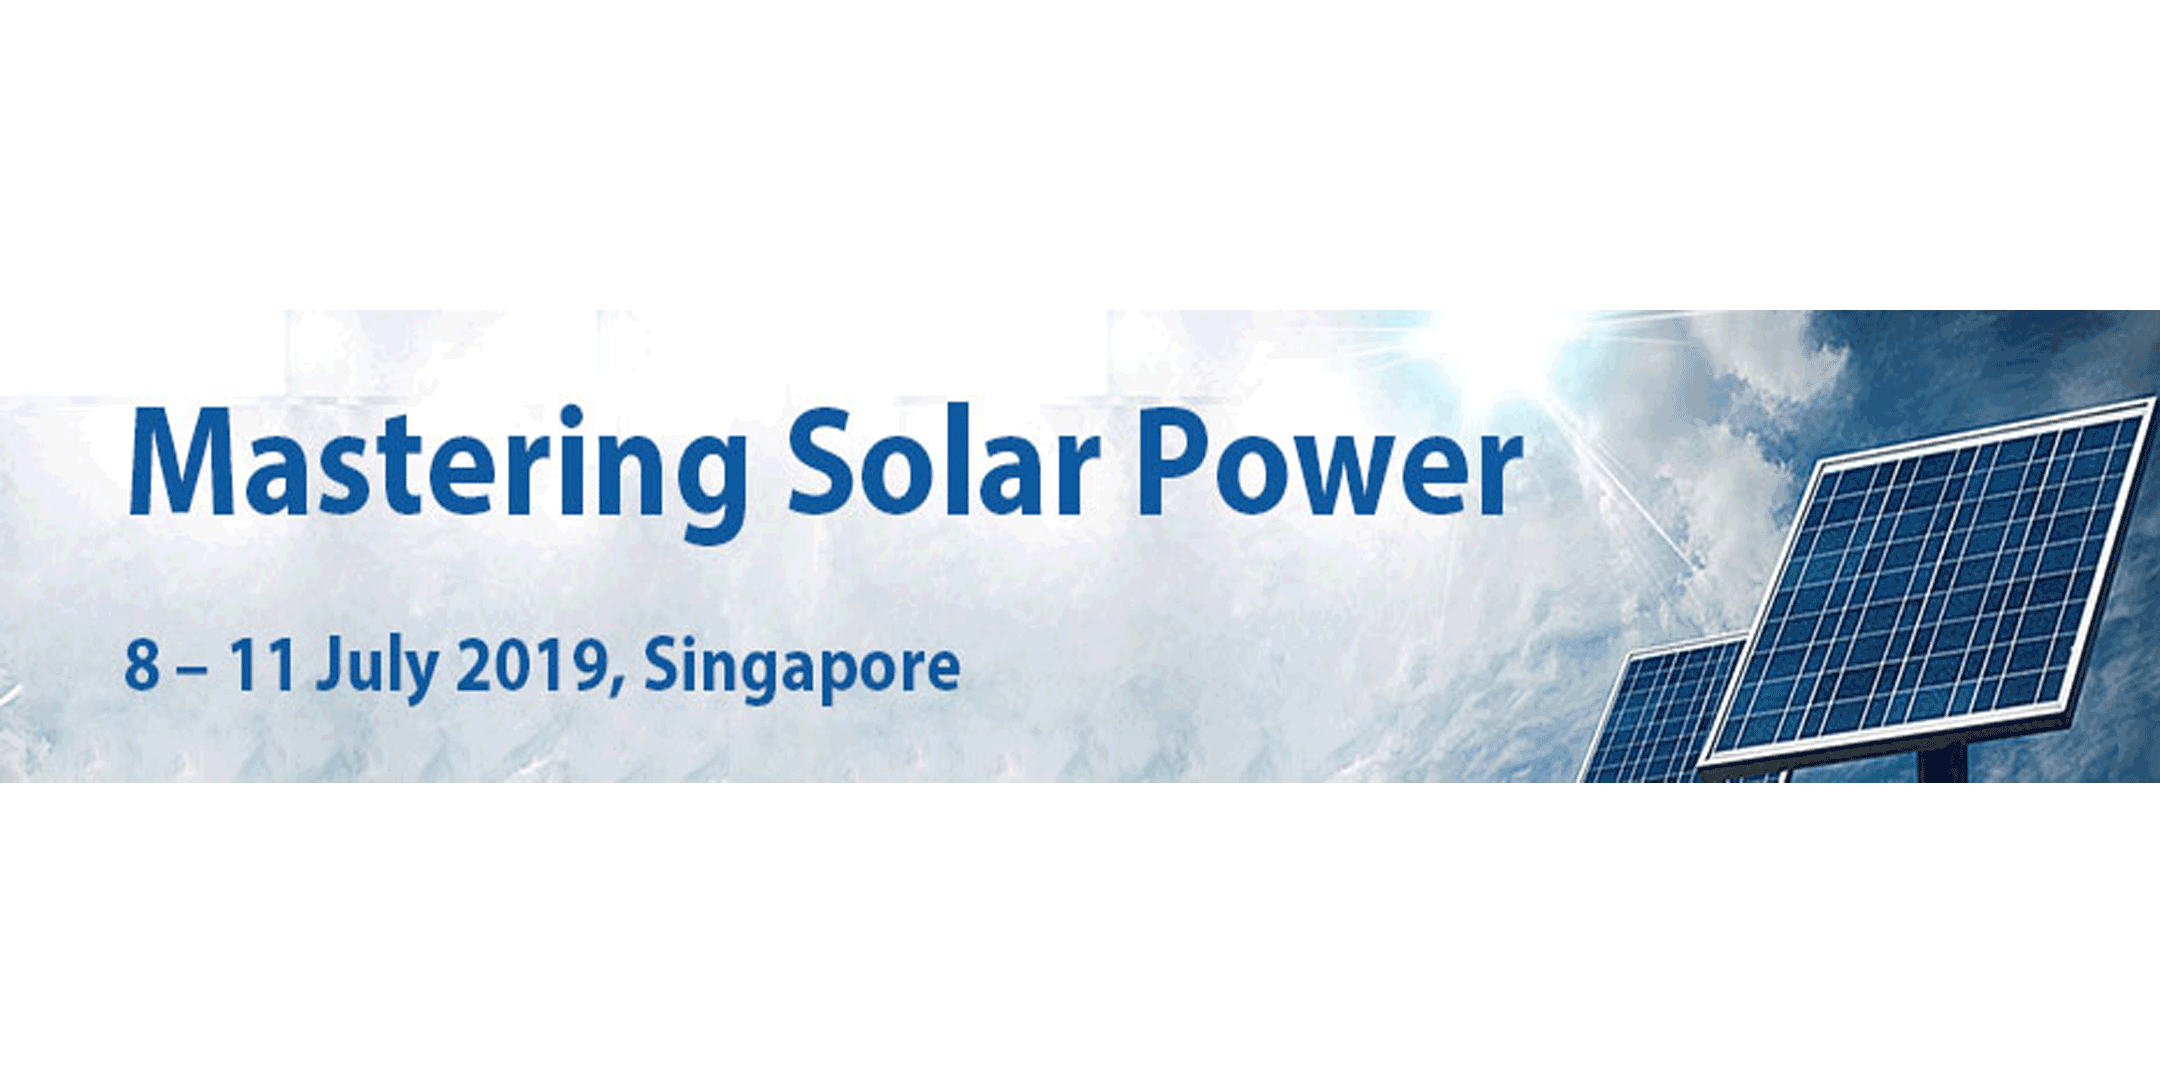 Mastering Solar Power, Singapore